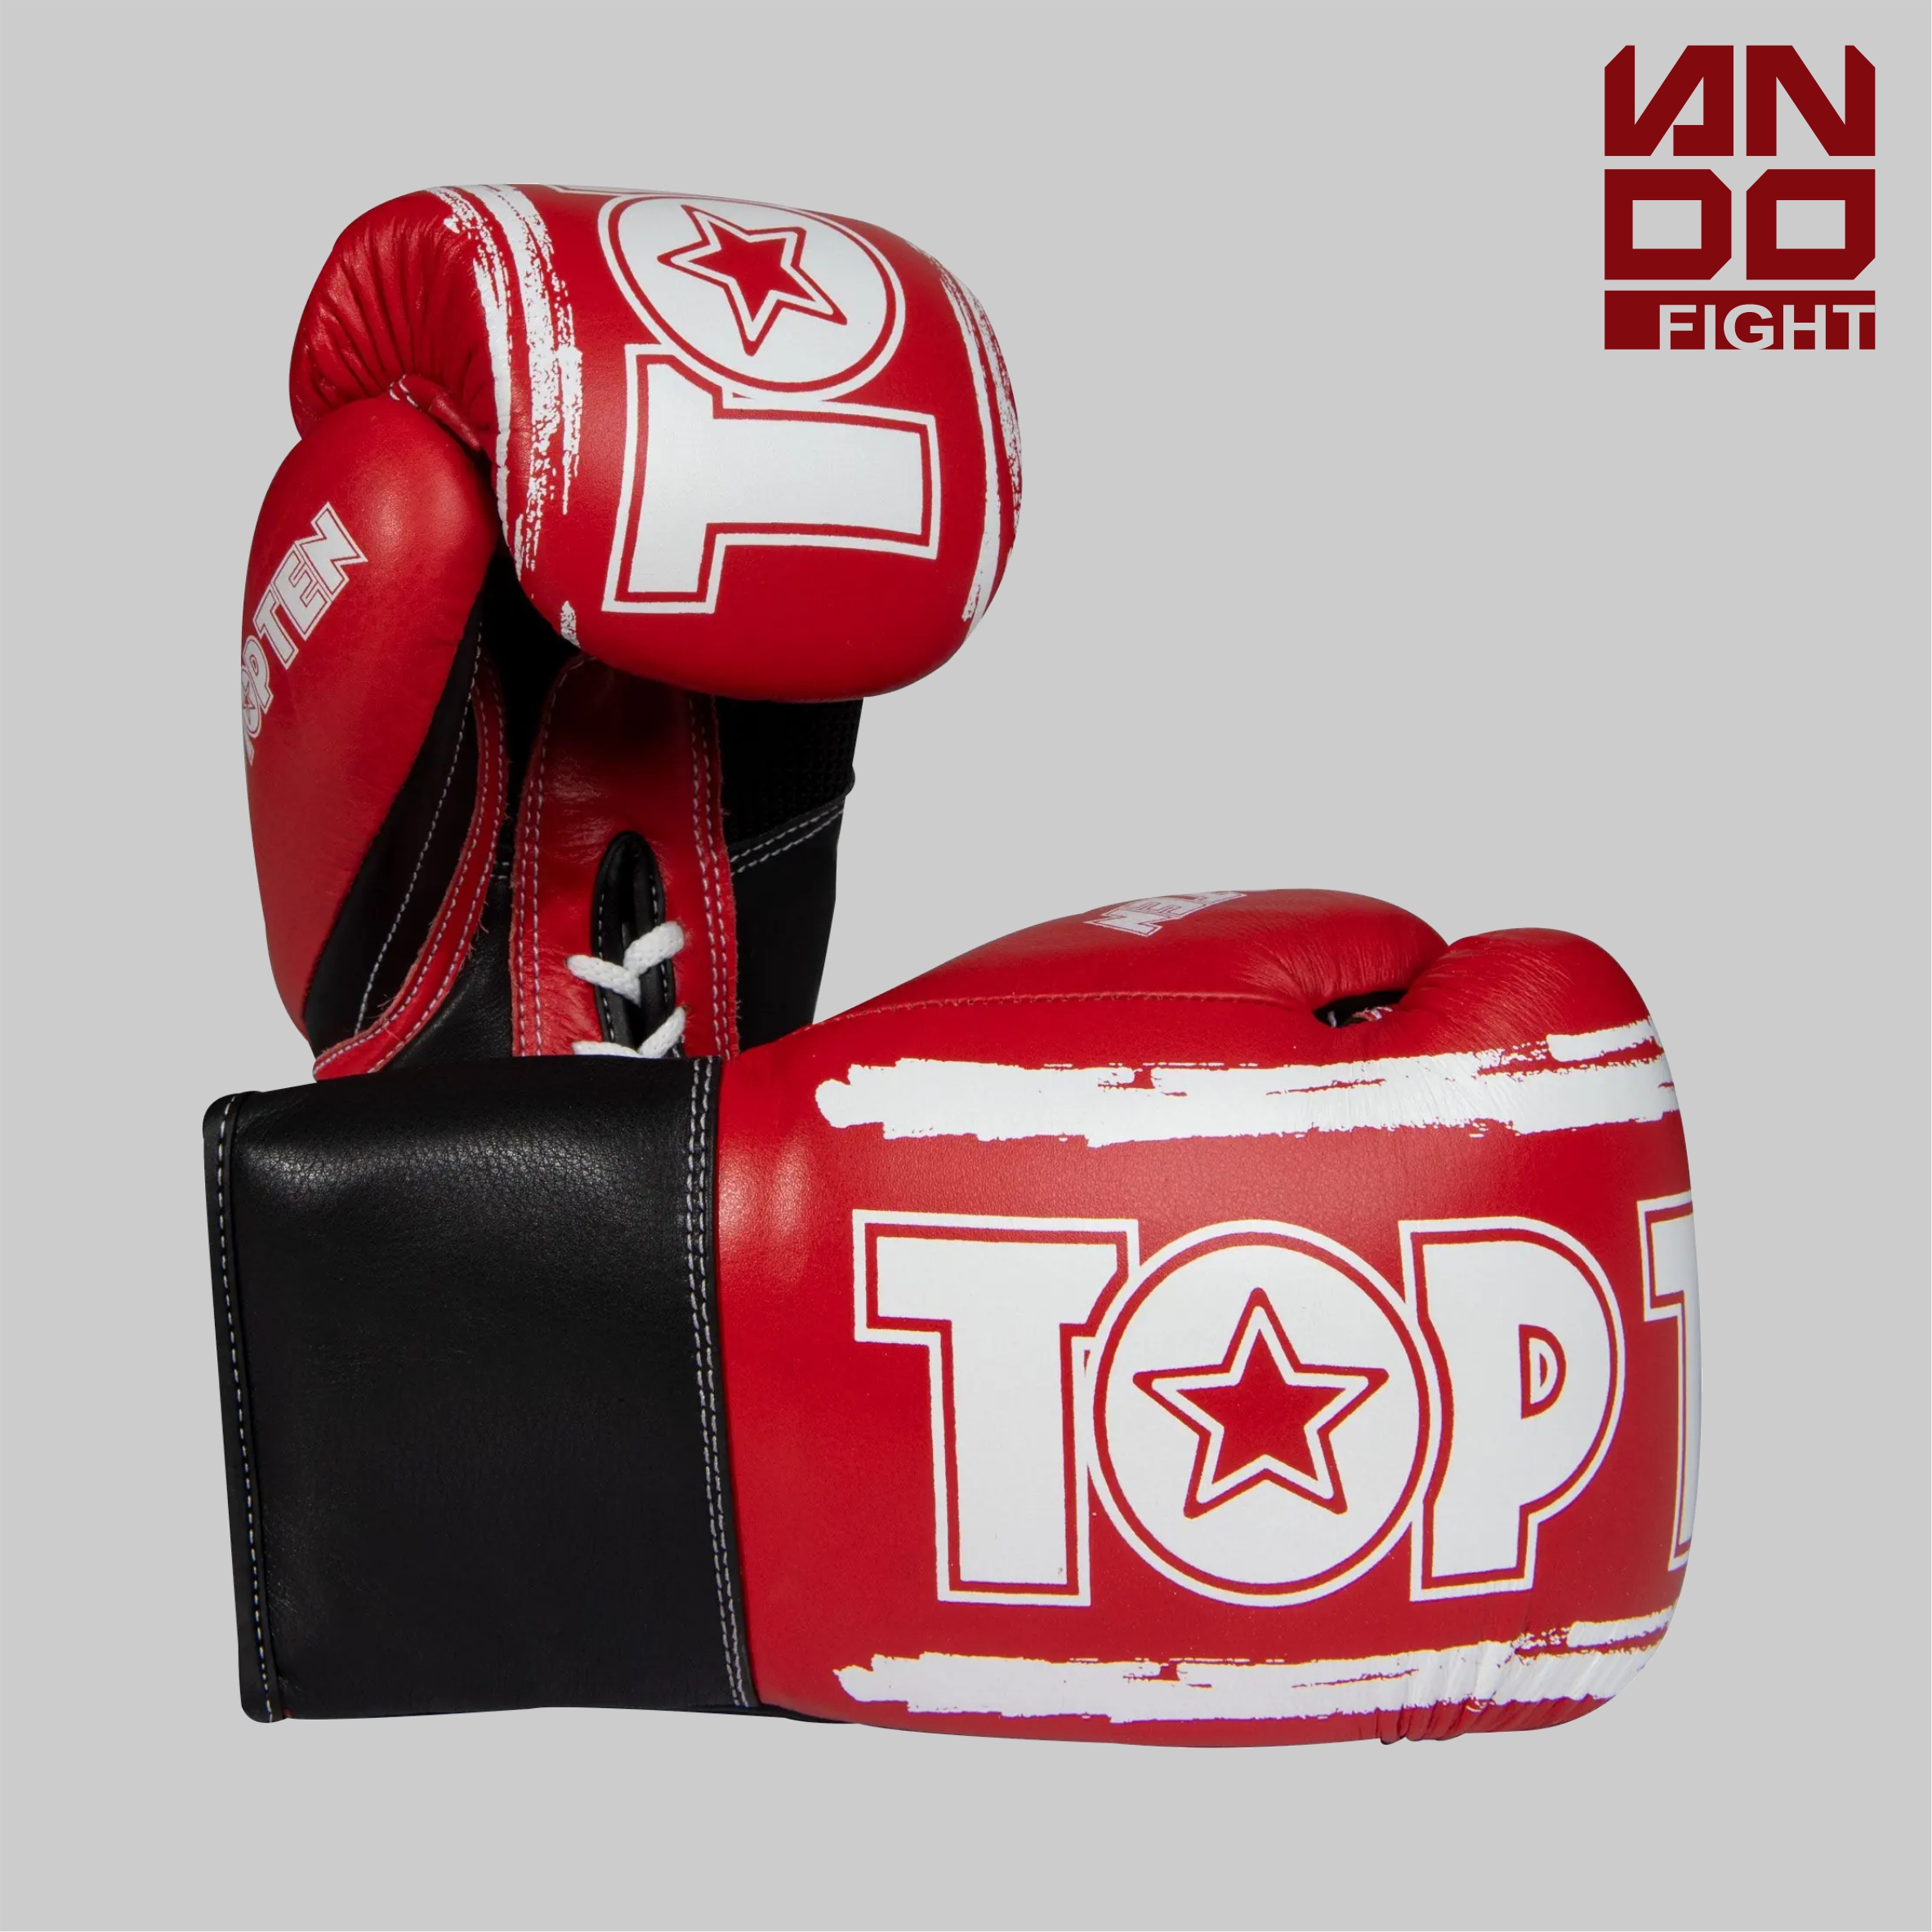 TOP TEN Boxing gloves “RoundUP” Красные